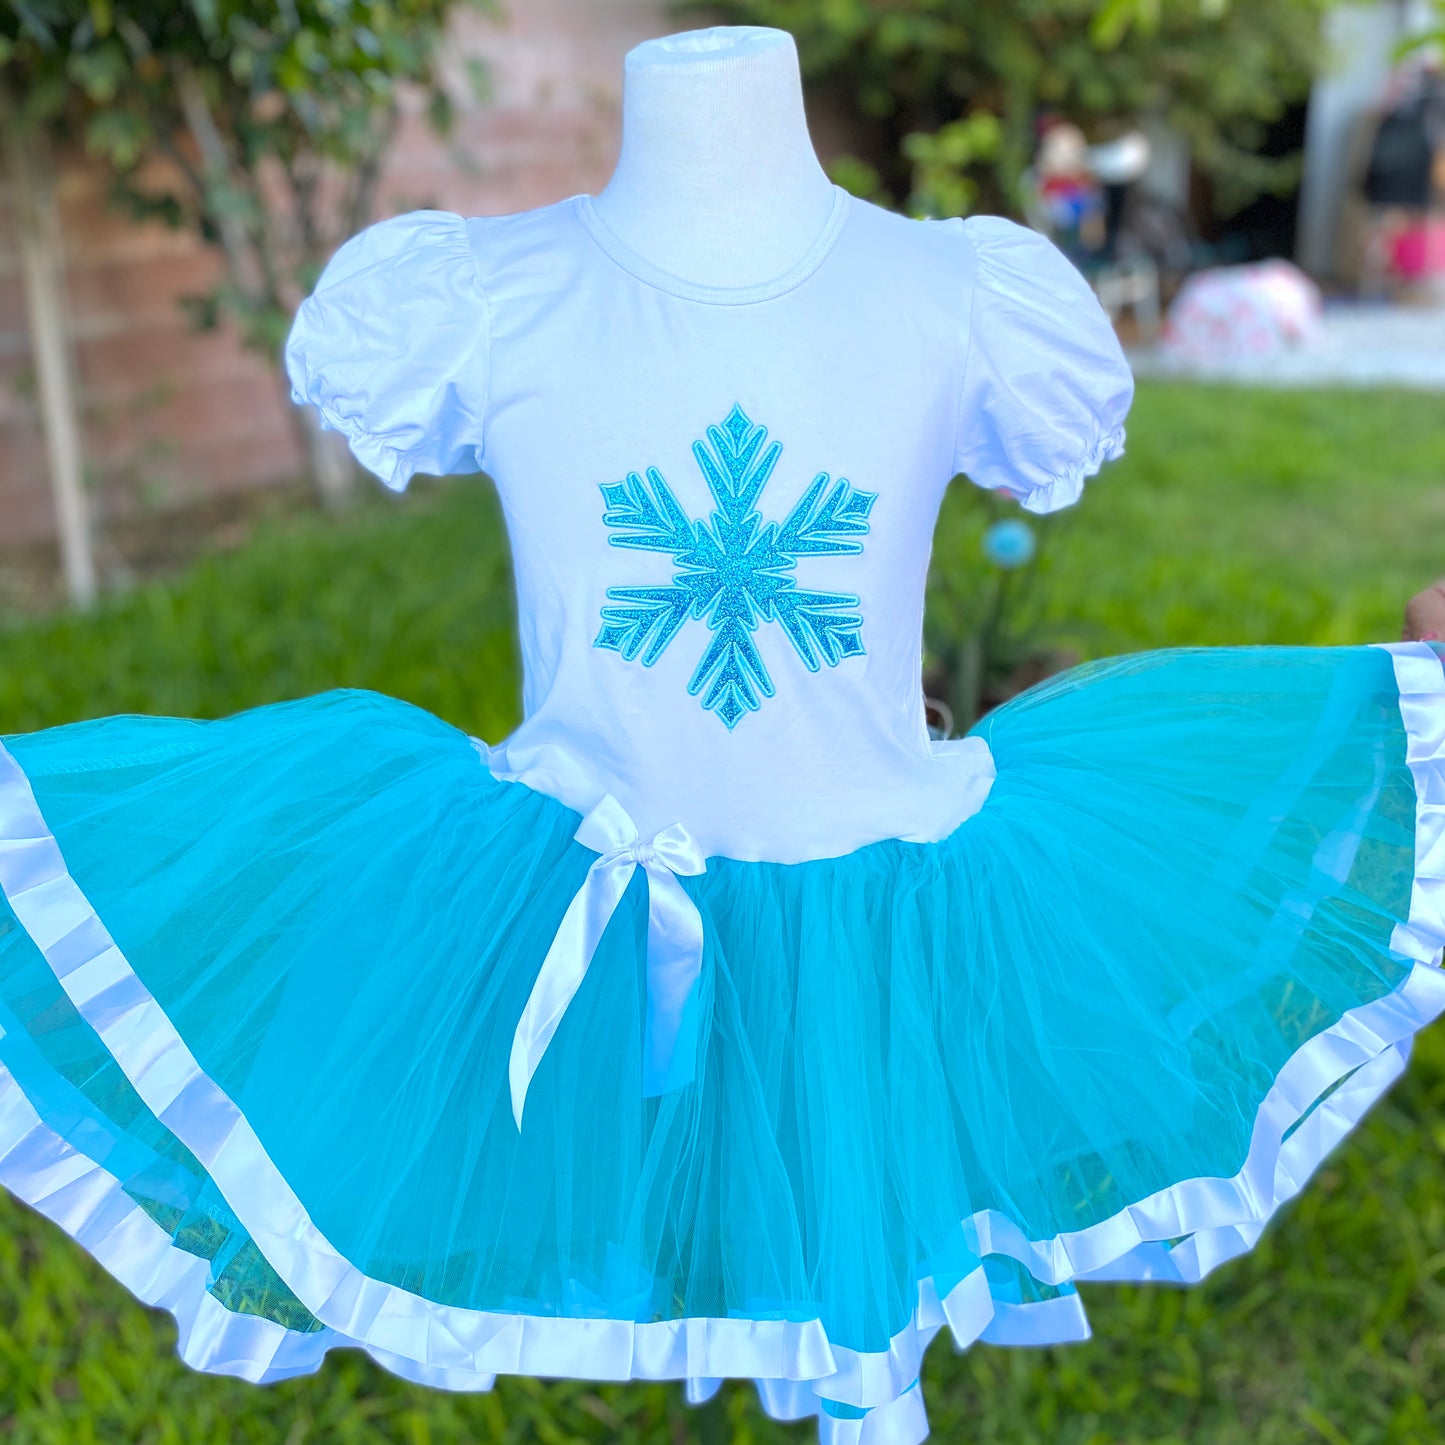 Blue Snowflake Tutu Dress ❄️